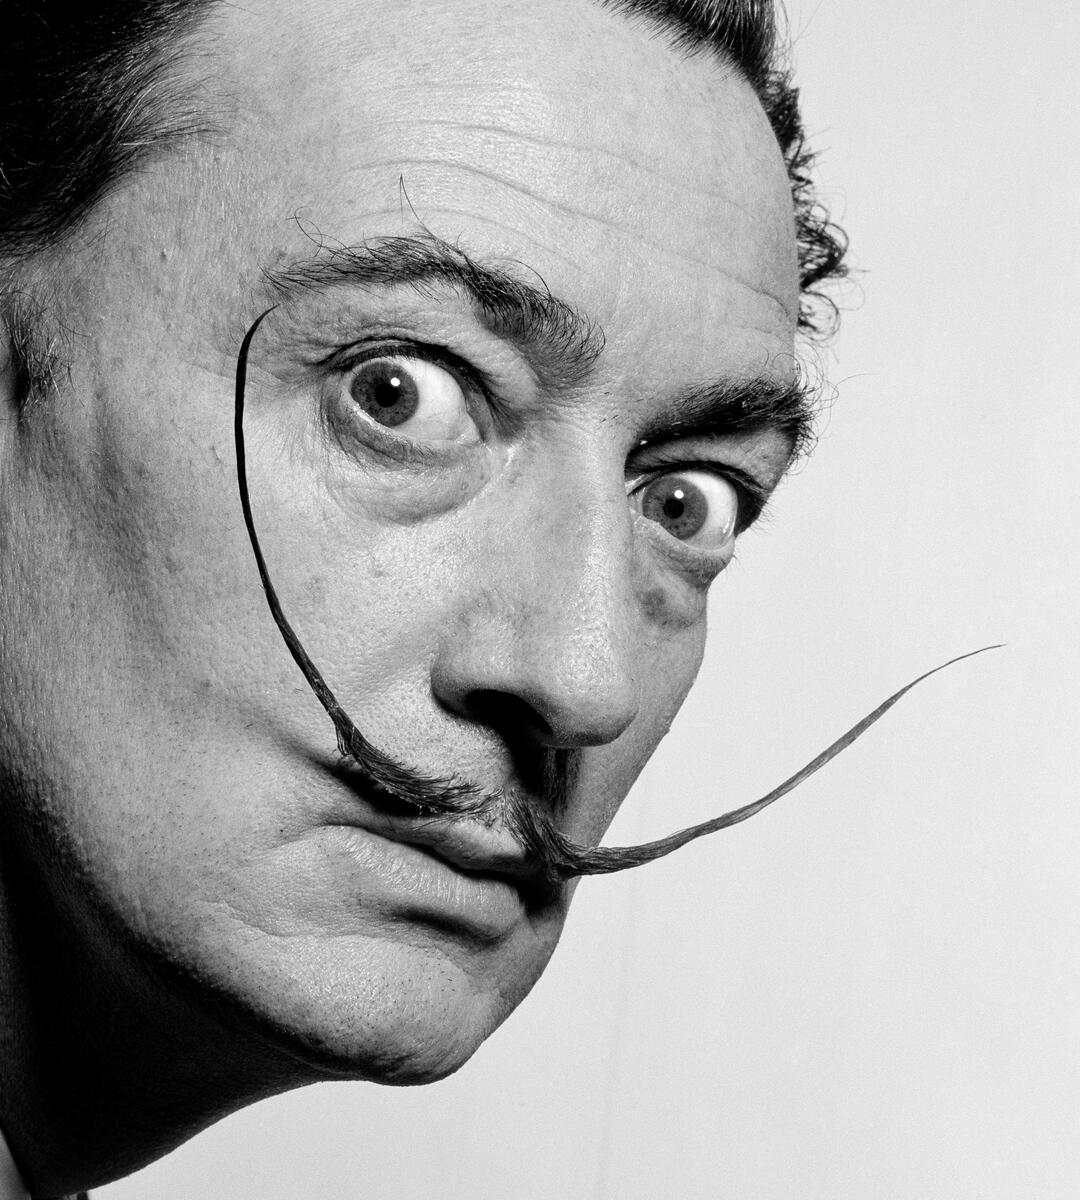 Philippe Halsman and Salvador Dalí's Enduring Partnership